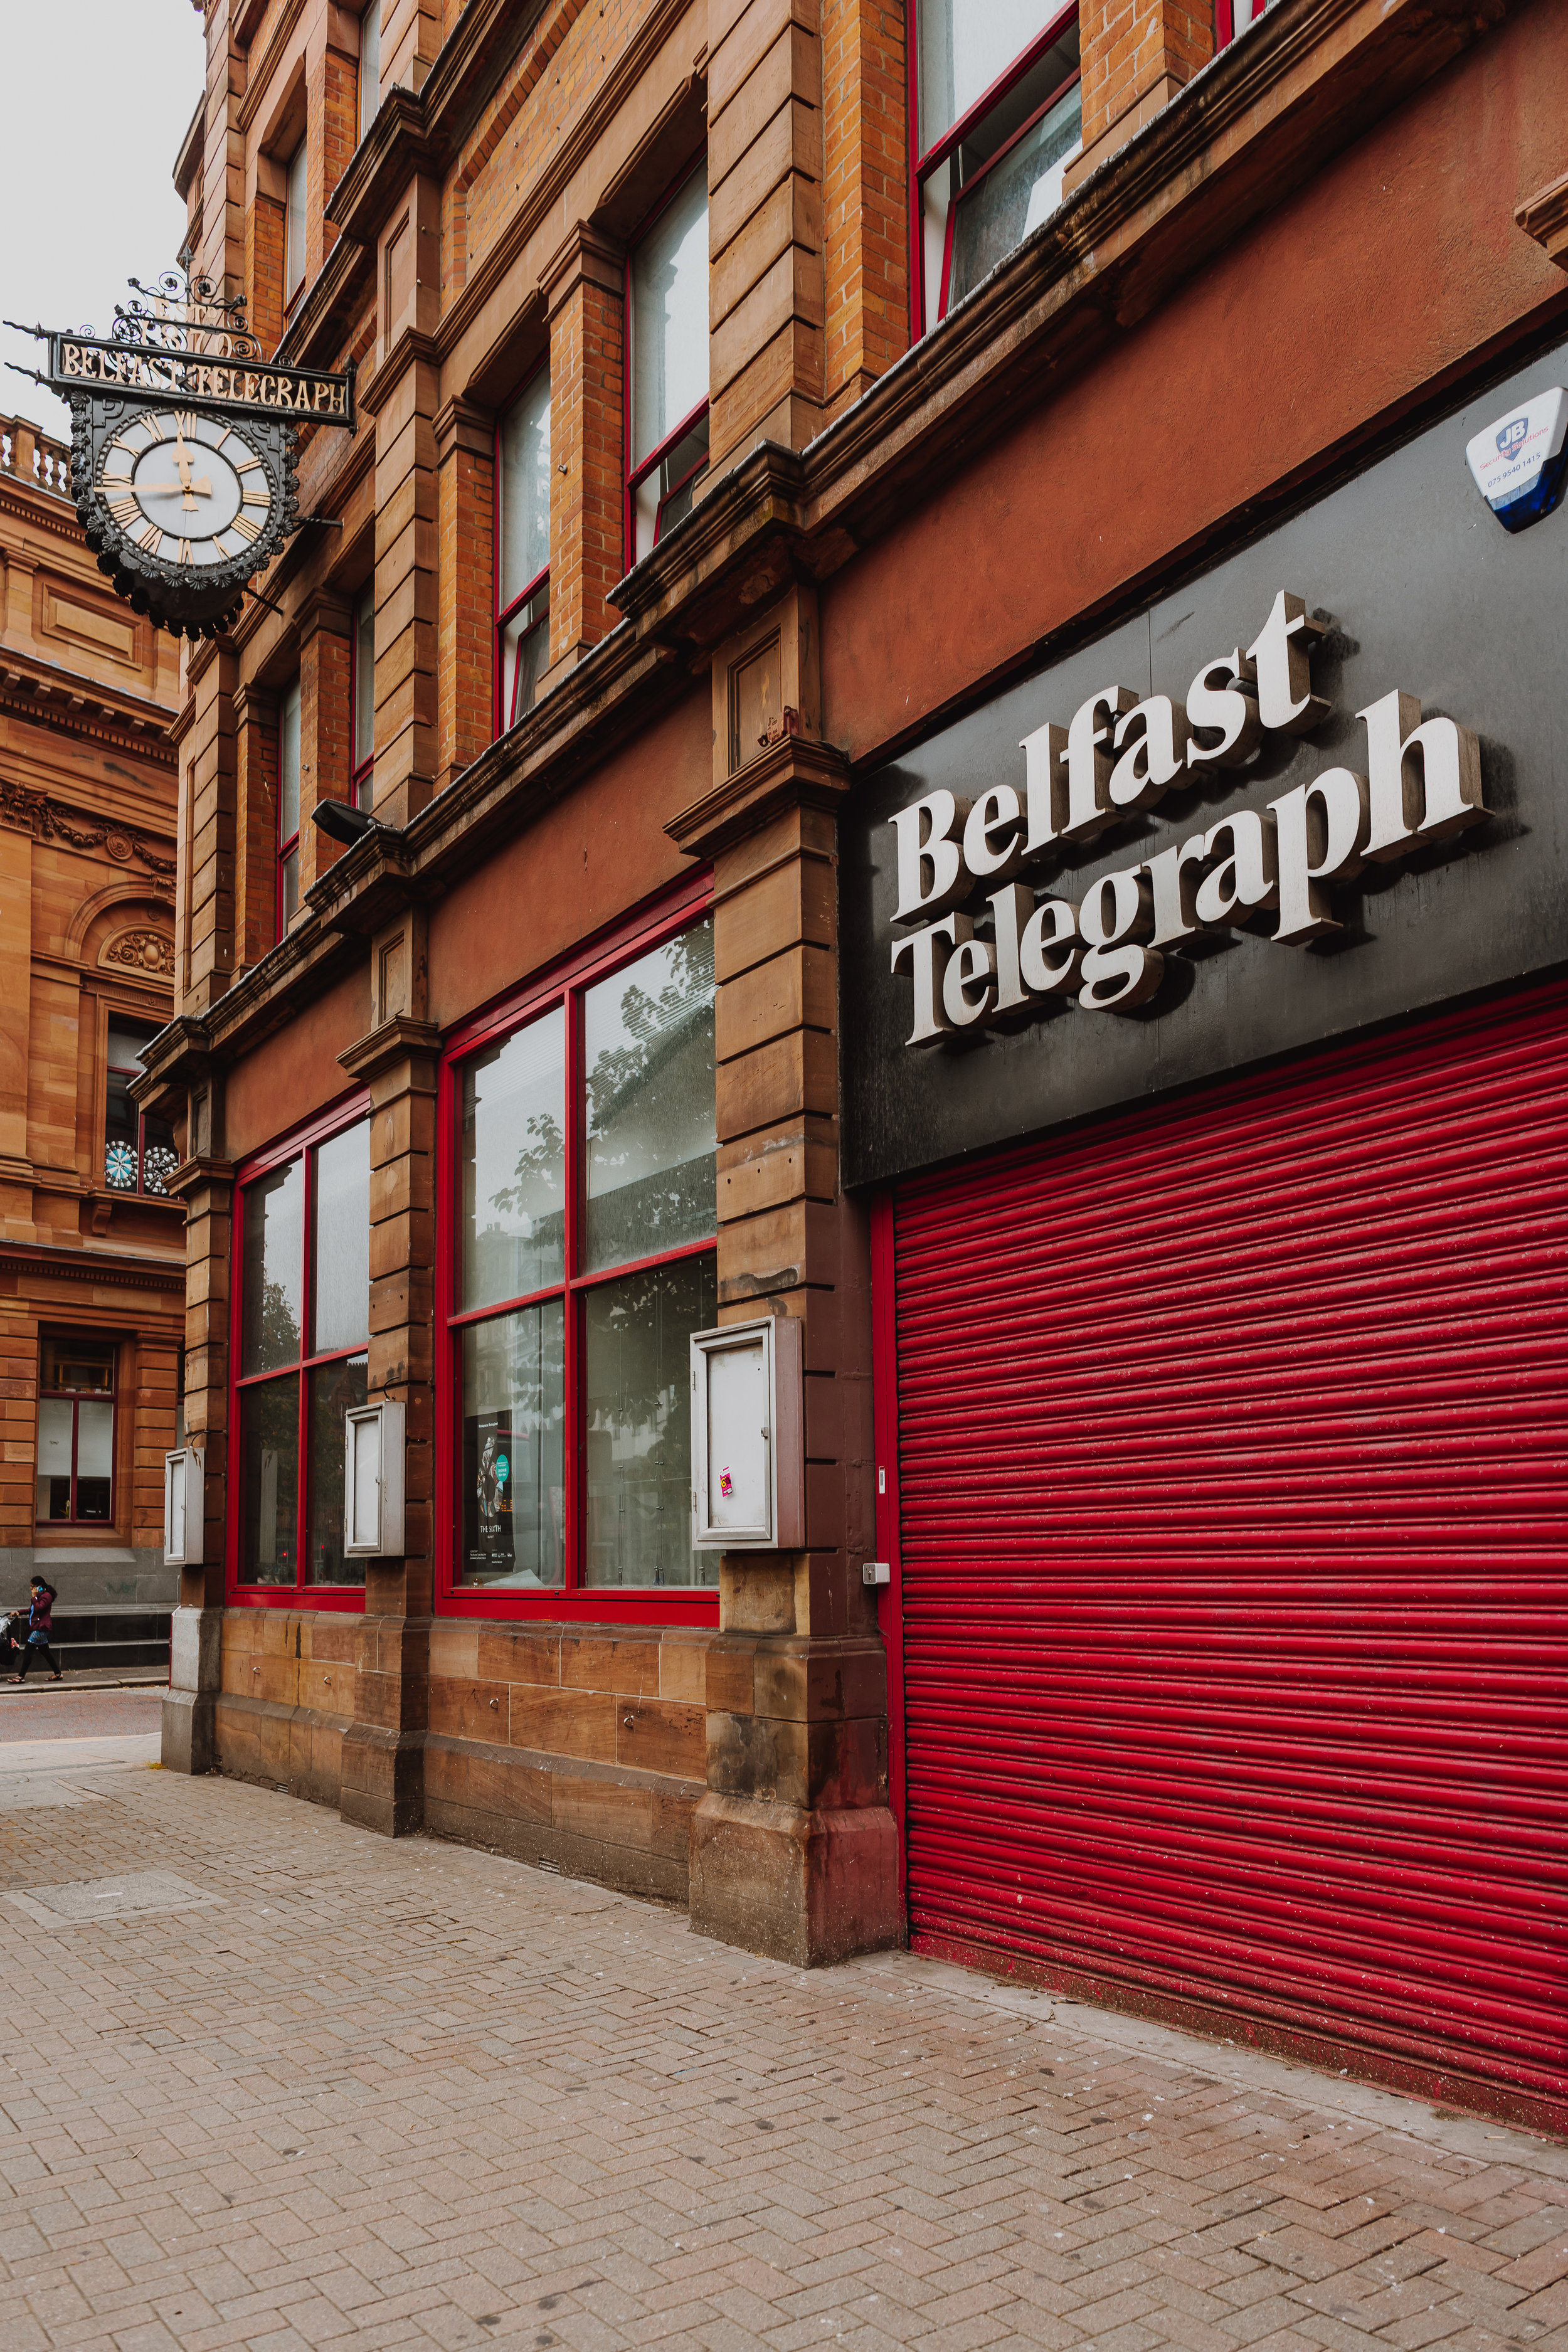 091918 -The Telegraph, Belfast - preshow - Judy Won -2340.jpg